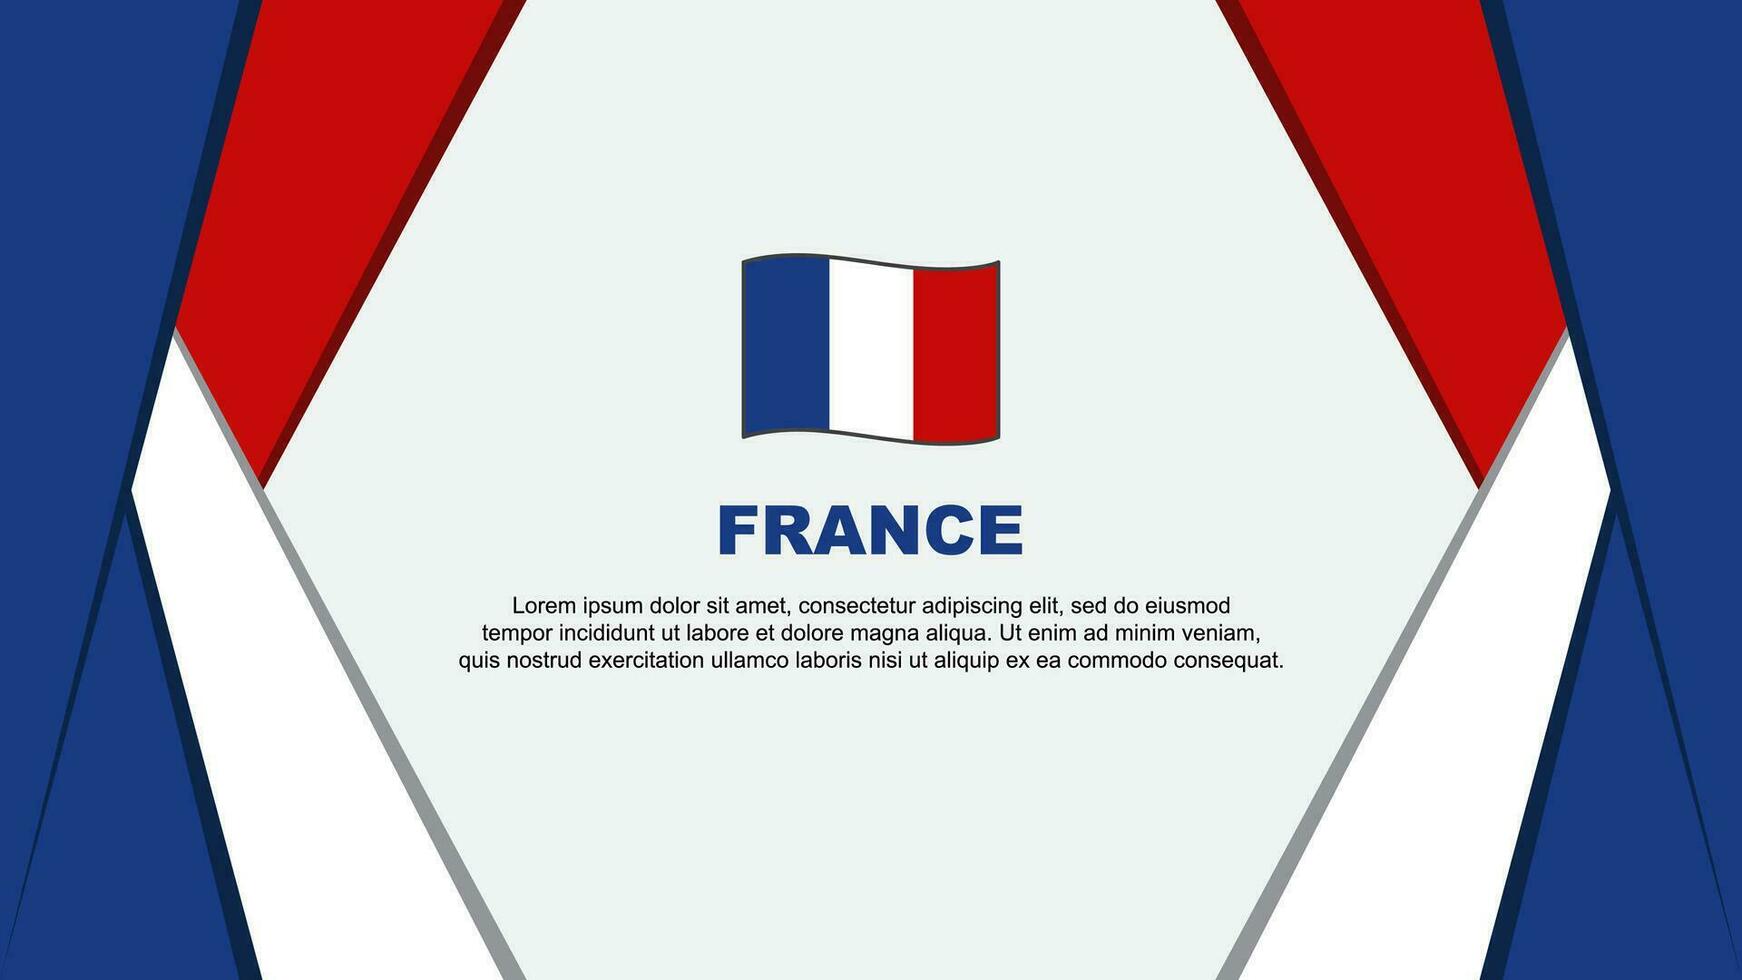 France Flag Abstract Background Design Template. France Independence Day Banner Cartoon Vector Illustration. France Flag